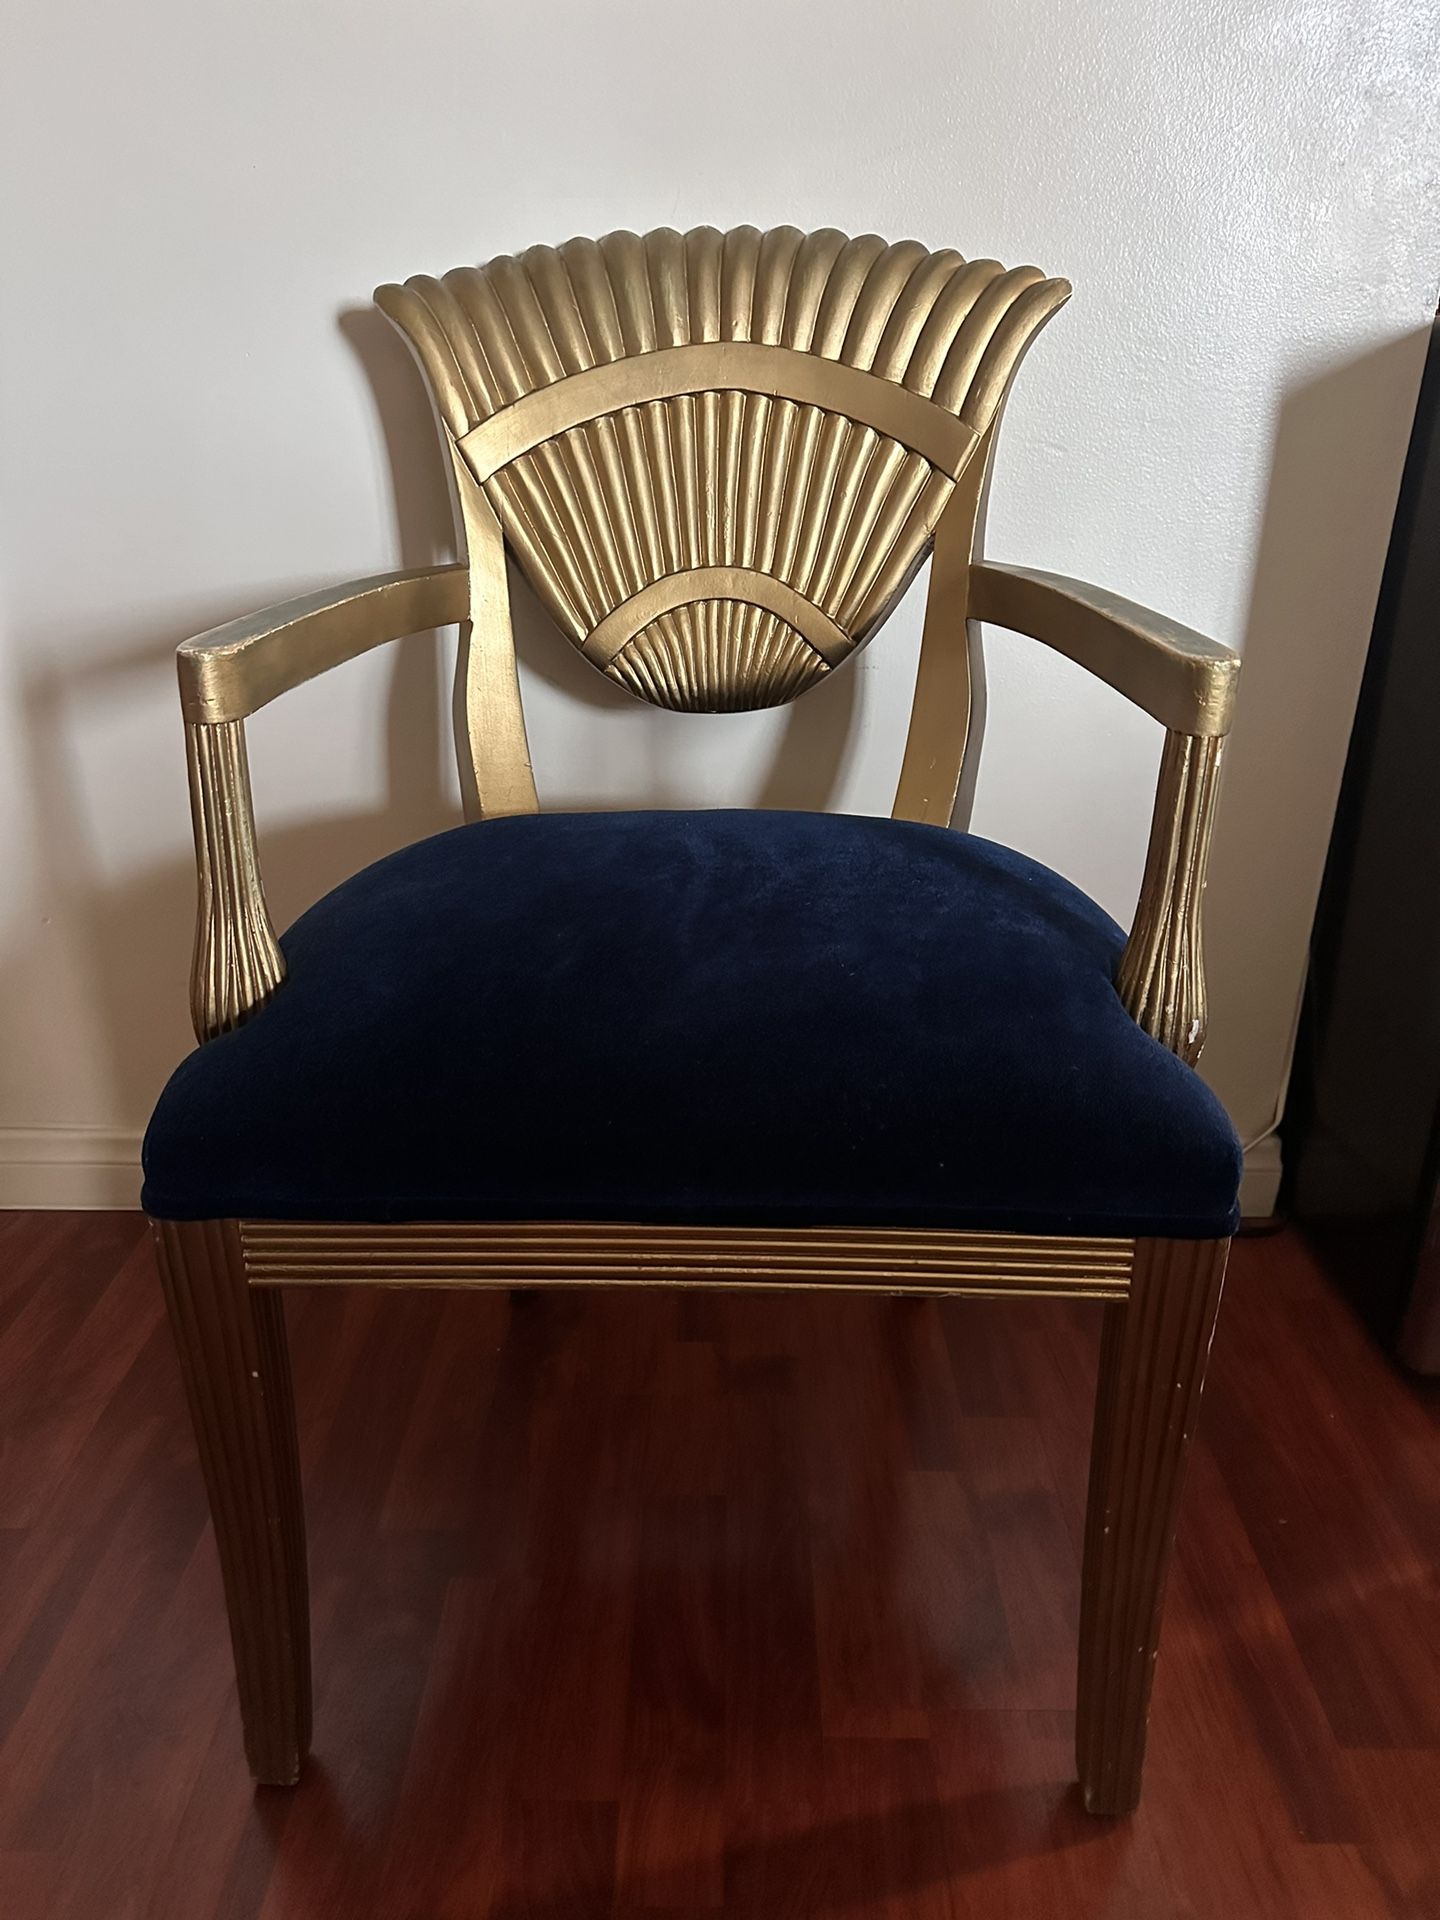 Vintage Chair Aka The Throne